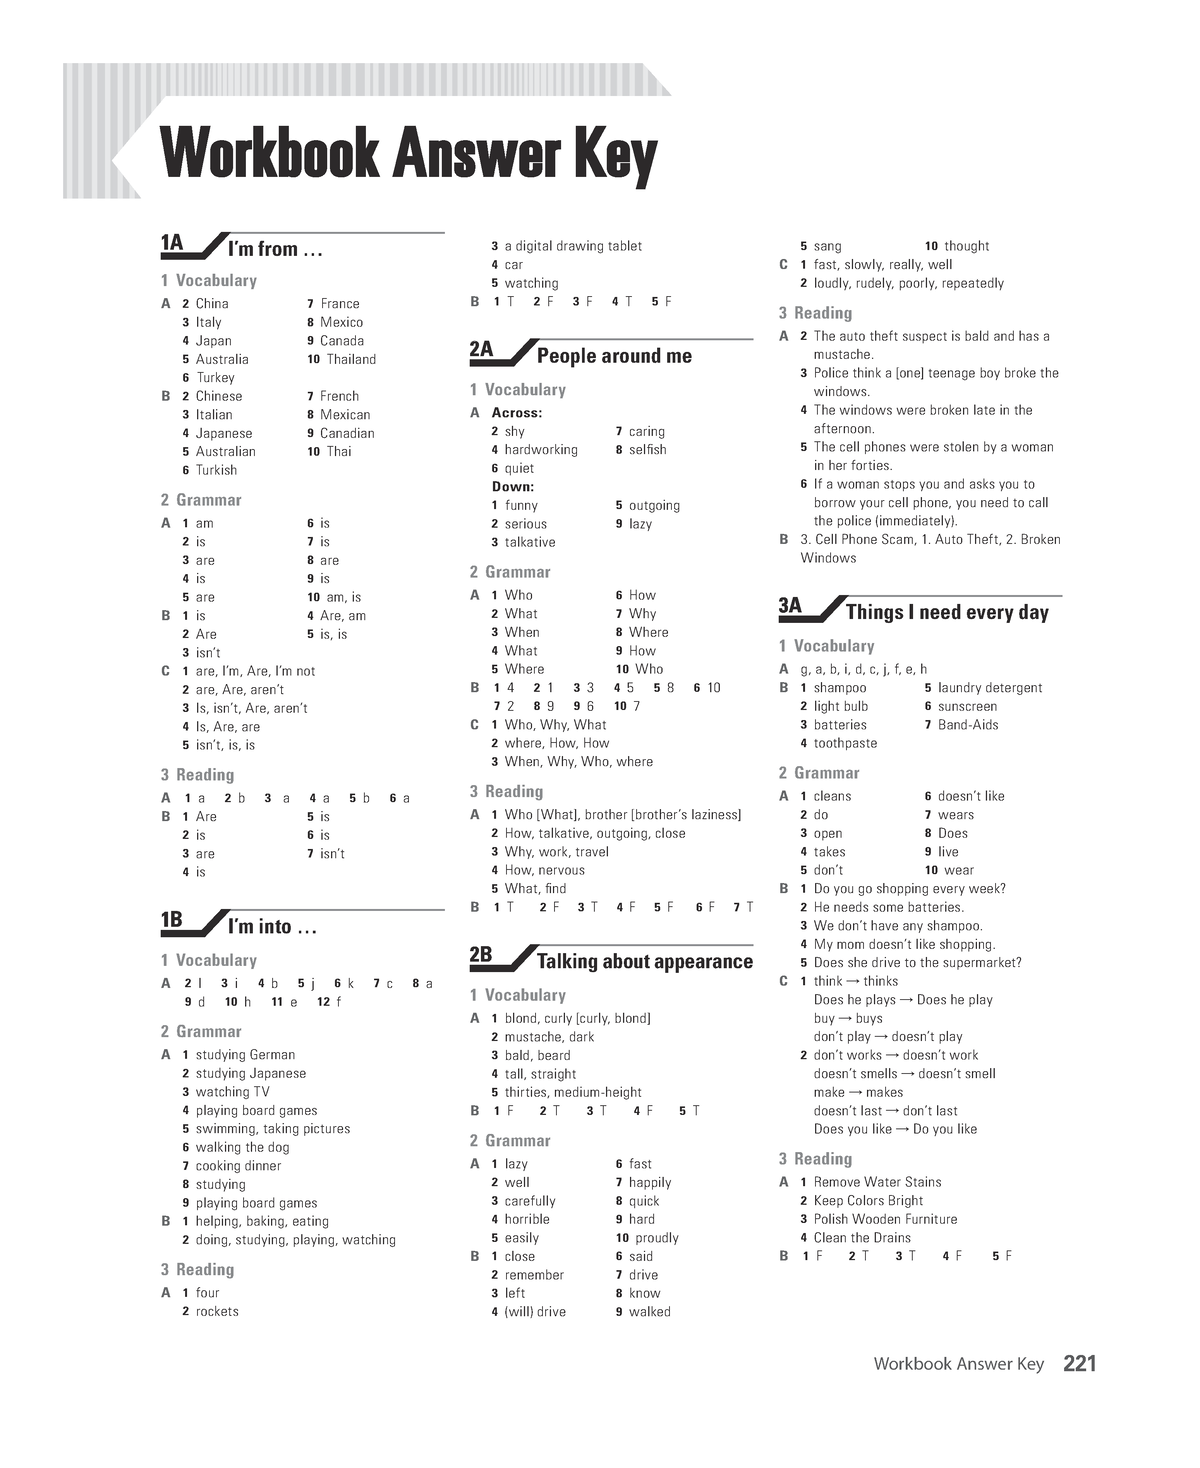 homework practice workbook answer key